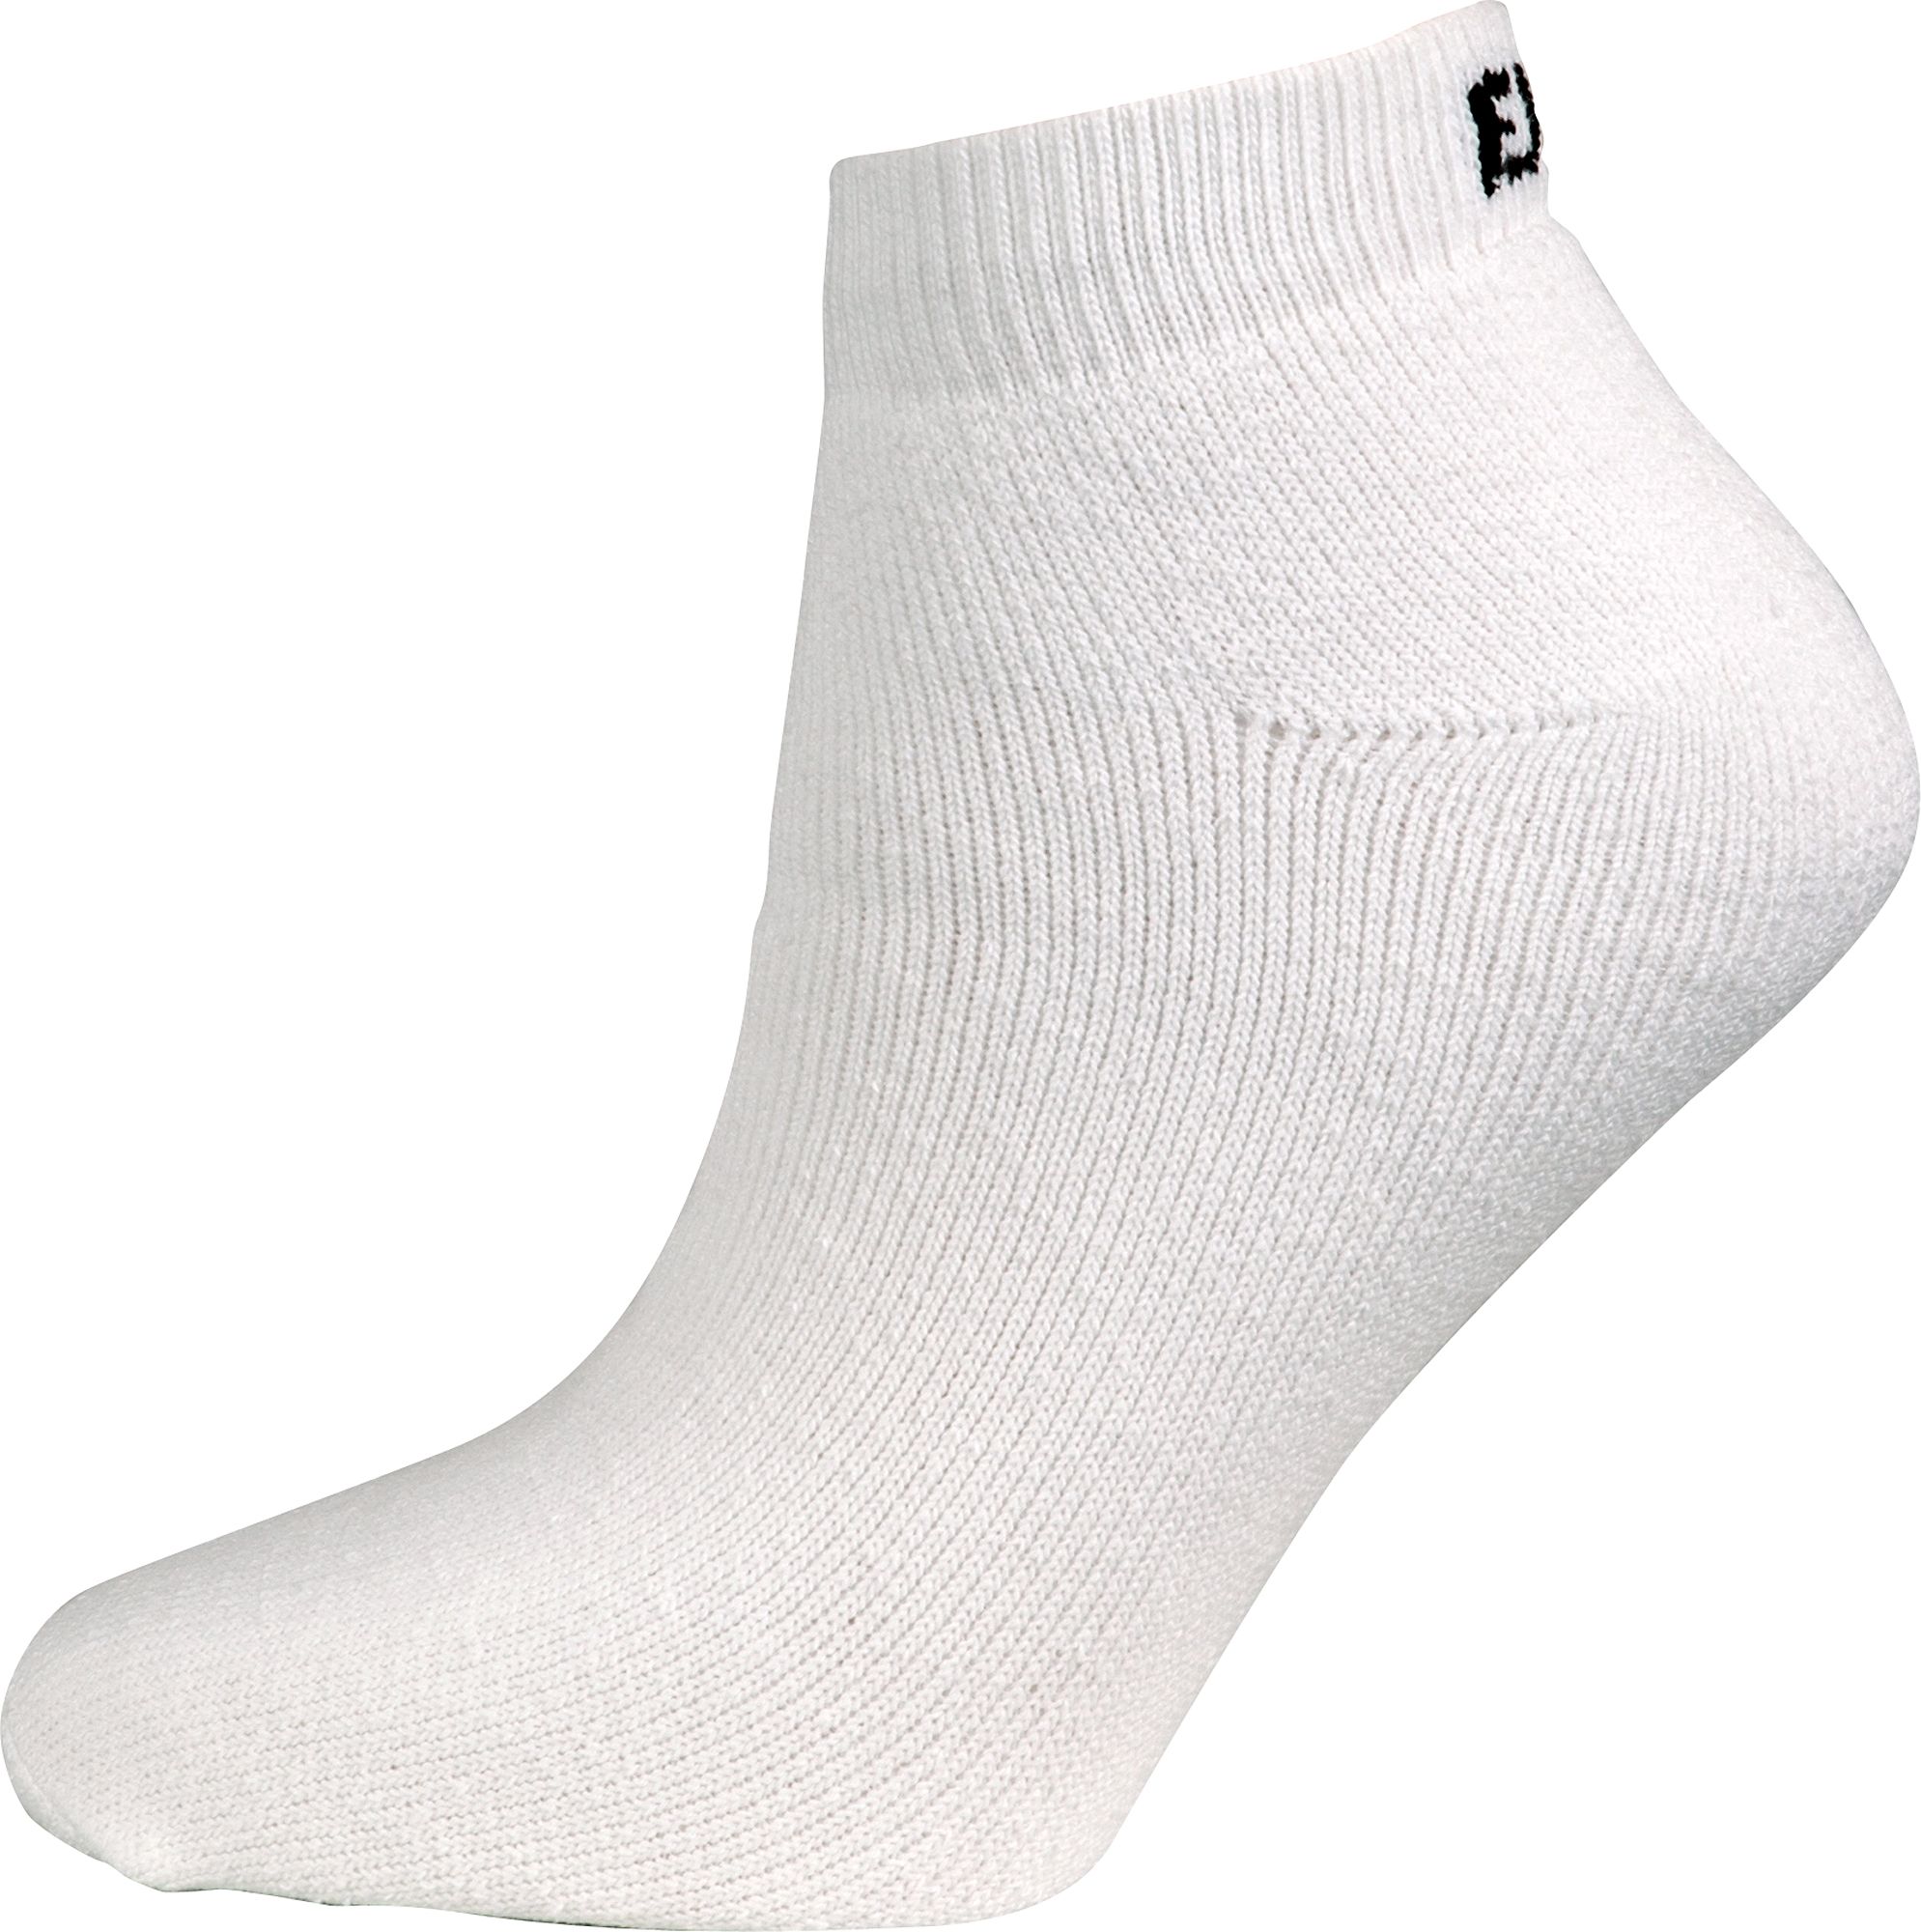 FootJoy Mens ComfortSof Sport Golf Socks - 3 Pack